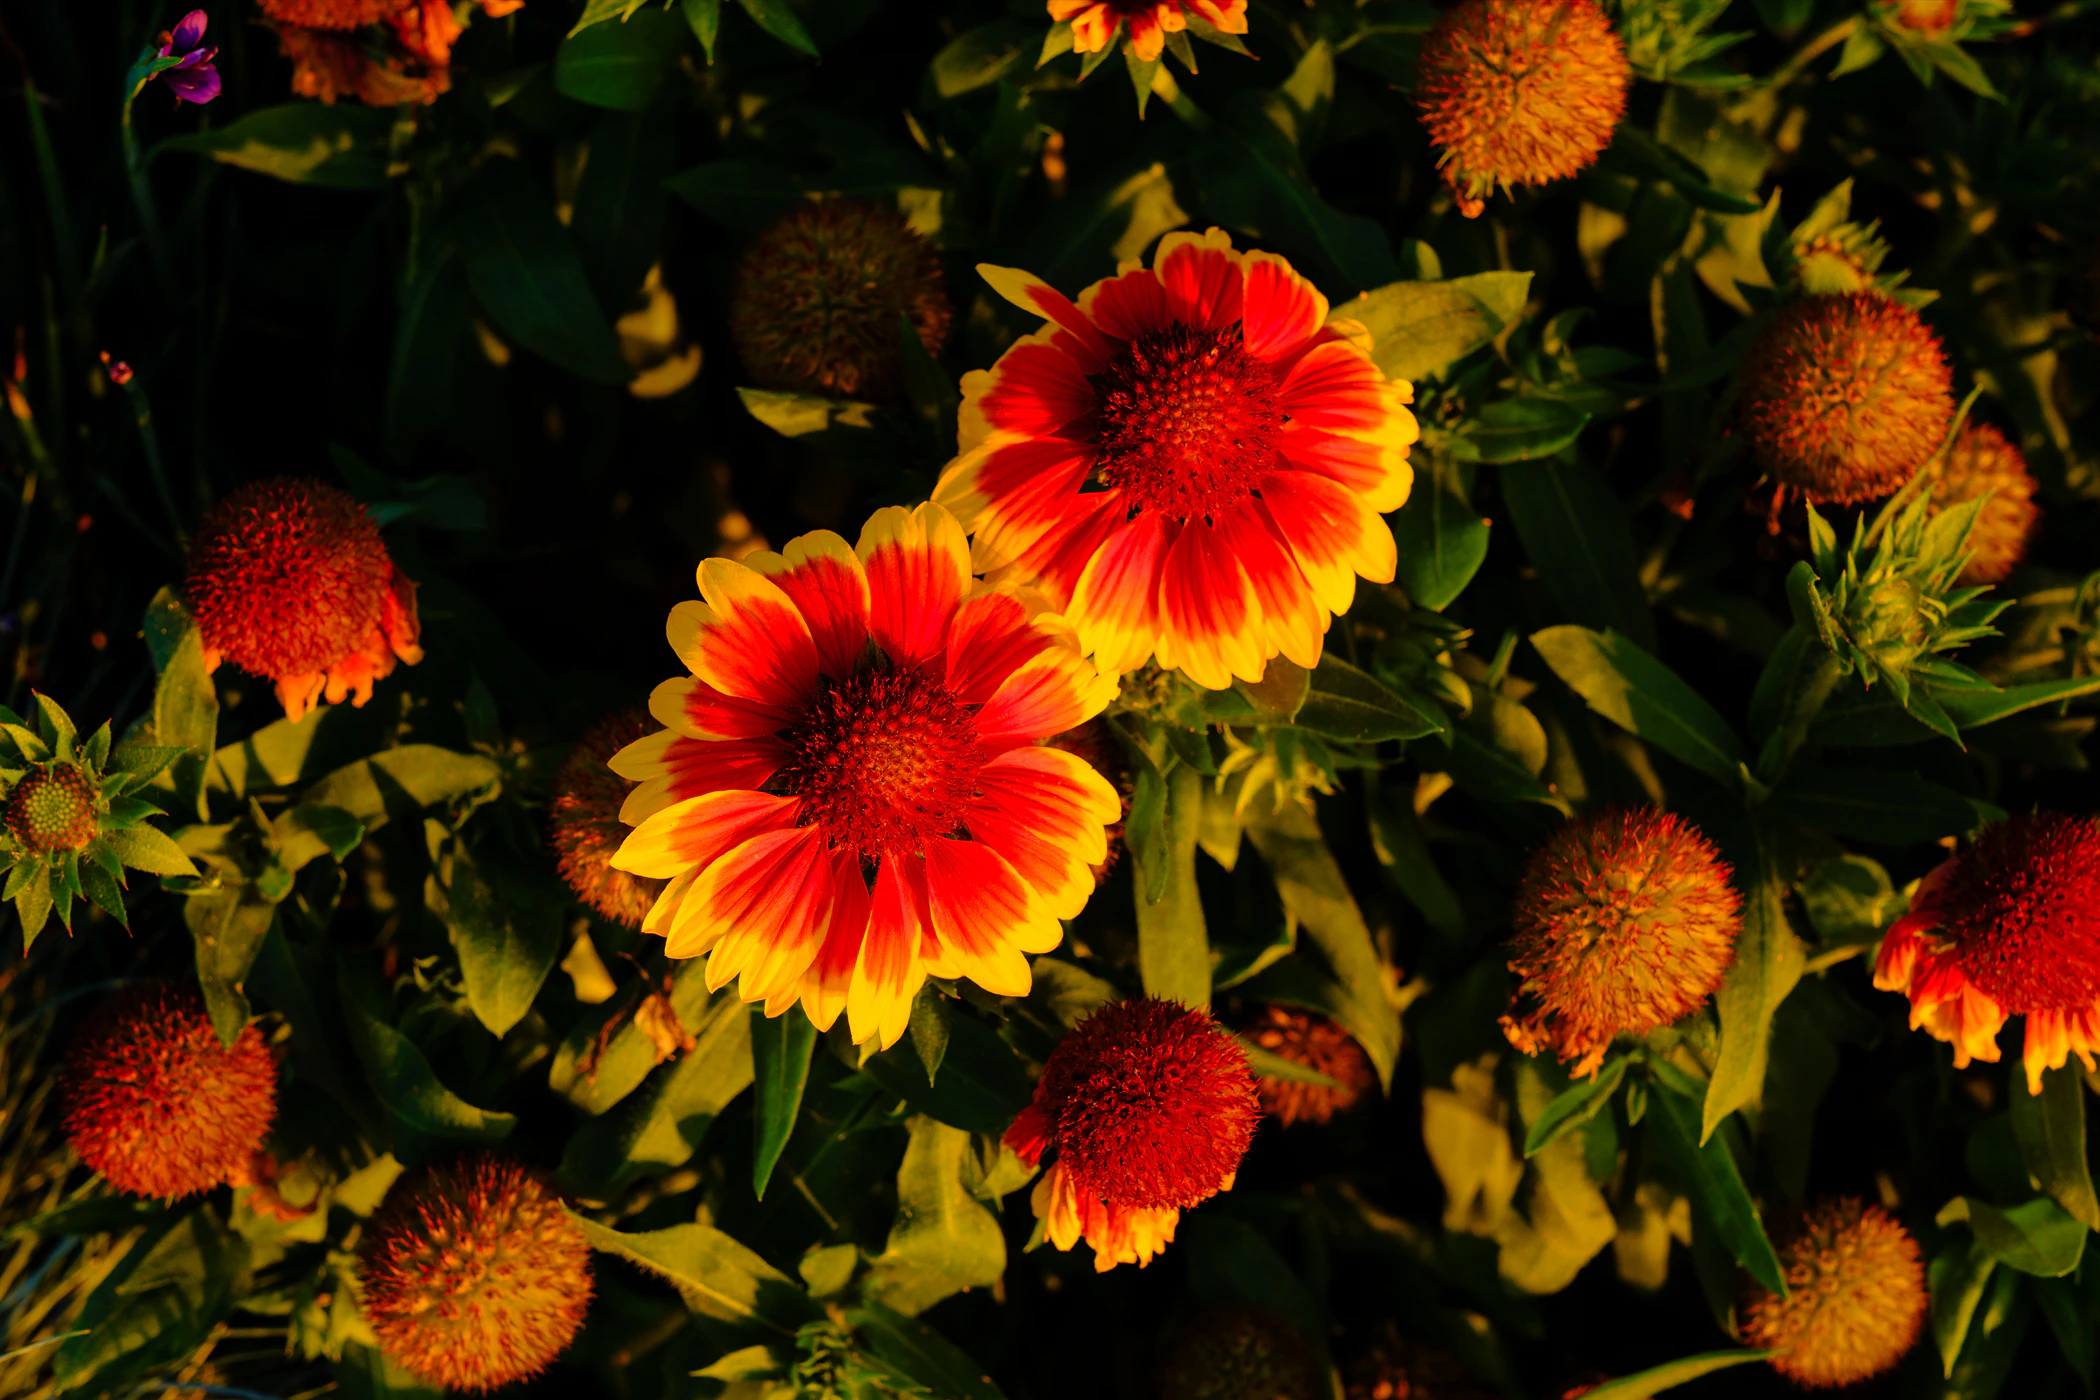 Flowers in the sunlight